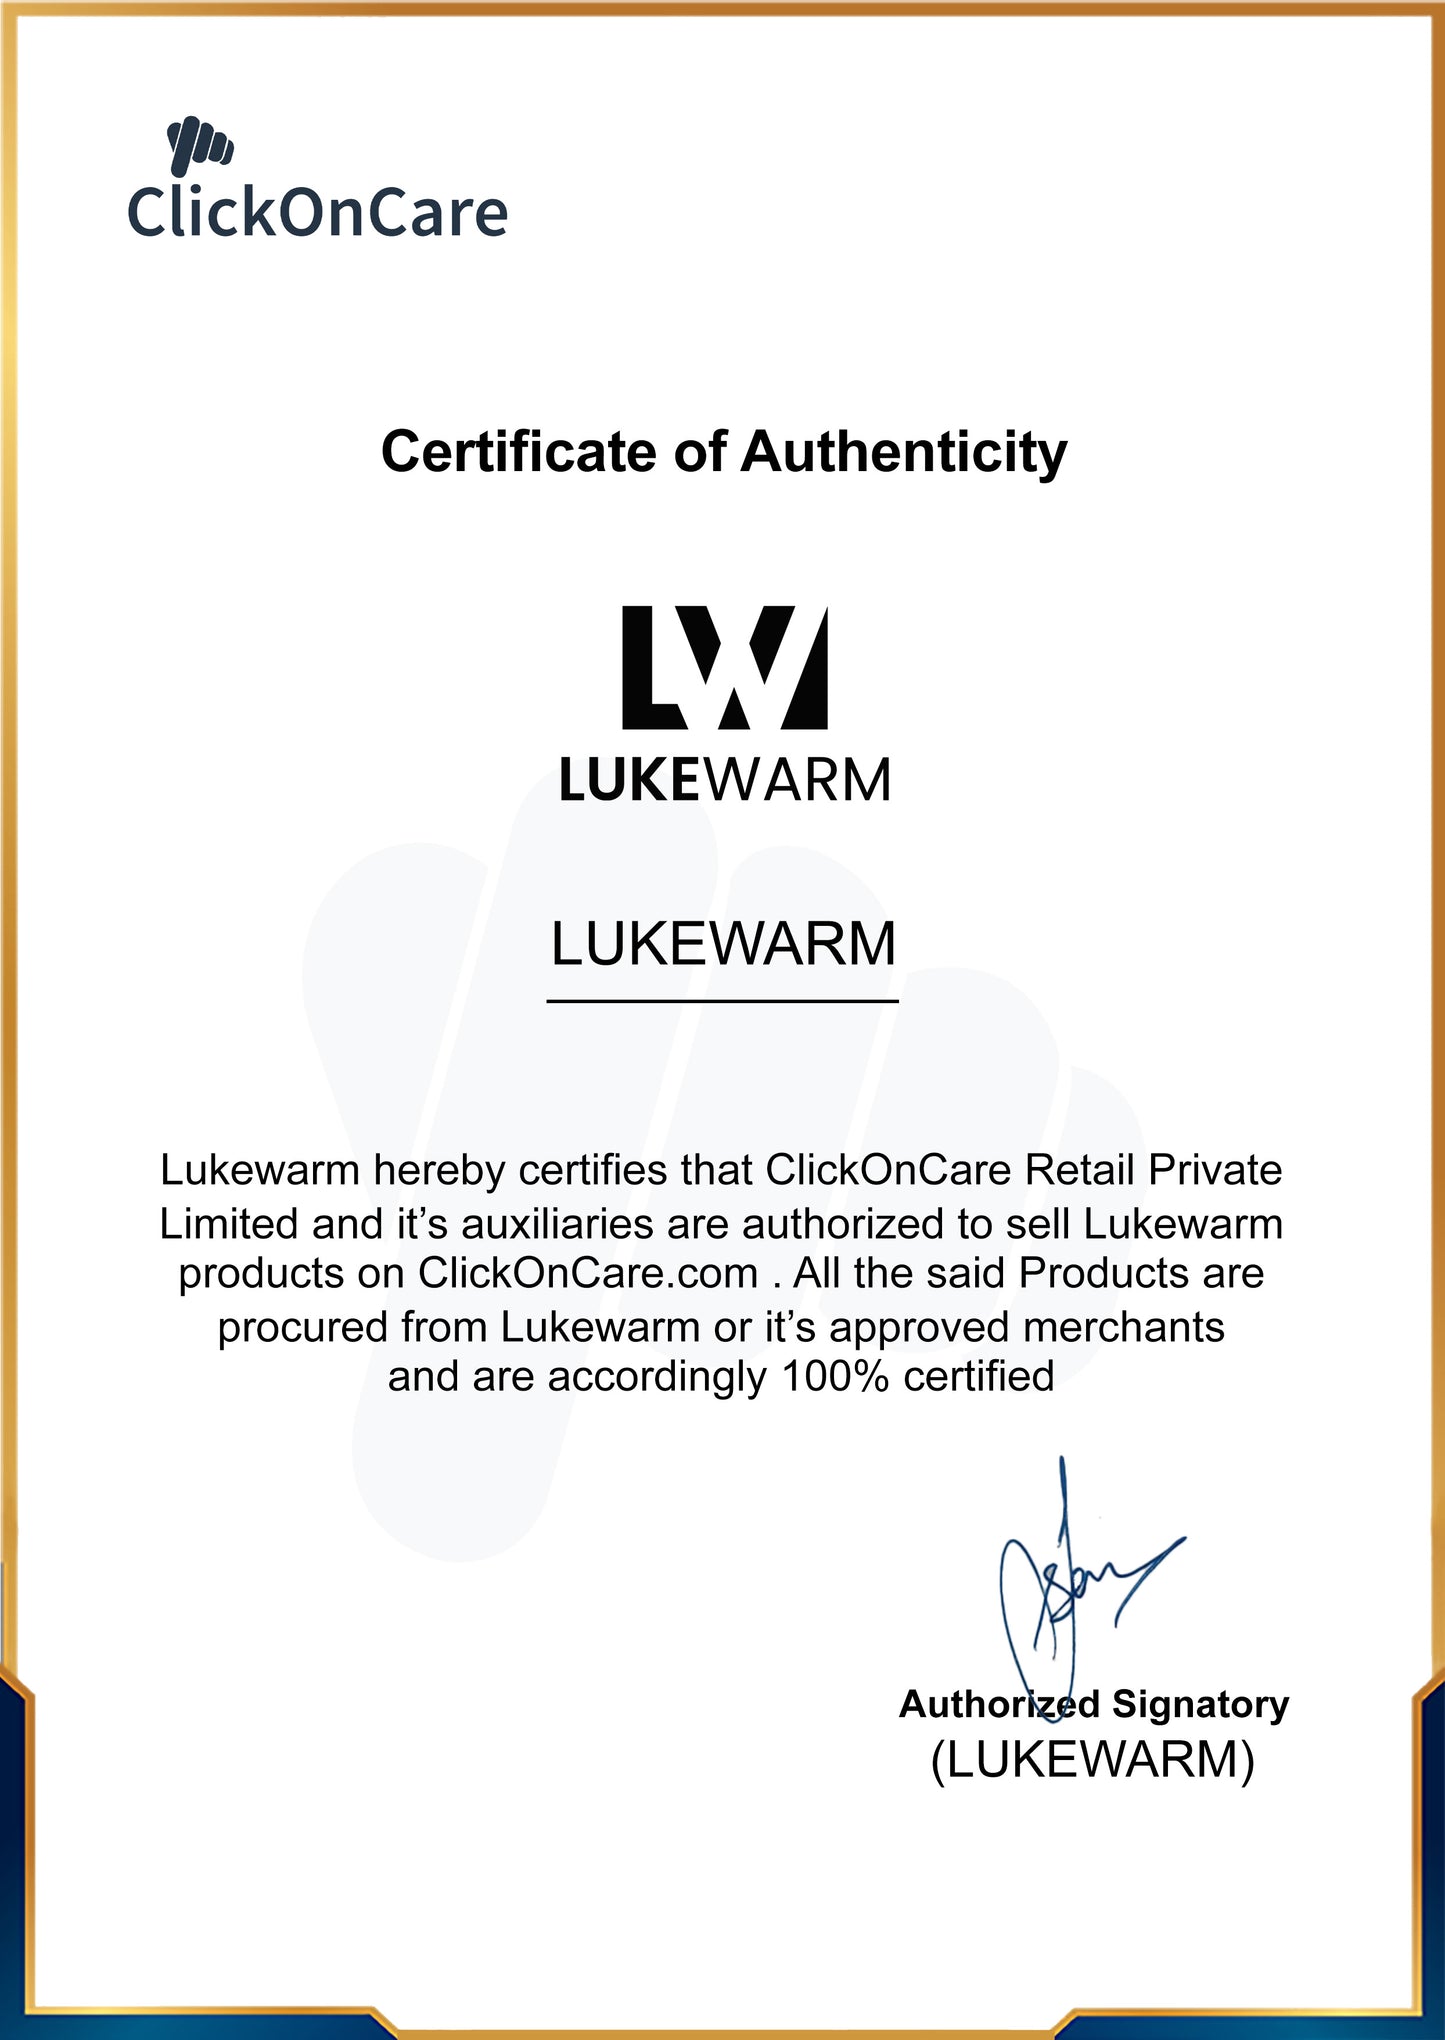 Lukewarm Glutathione Facewash, 100ml + Lukewarm Mini Sunscreen Travel Pack, 20ml